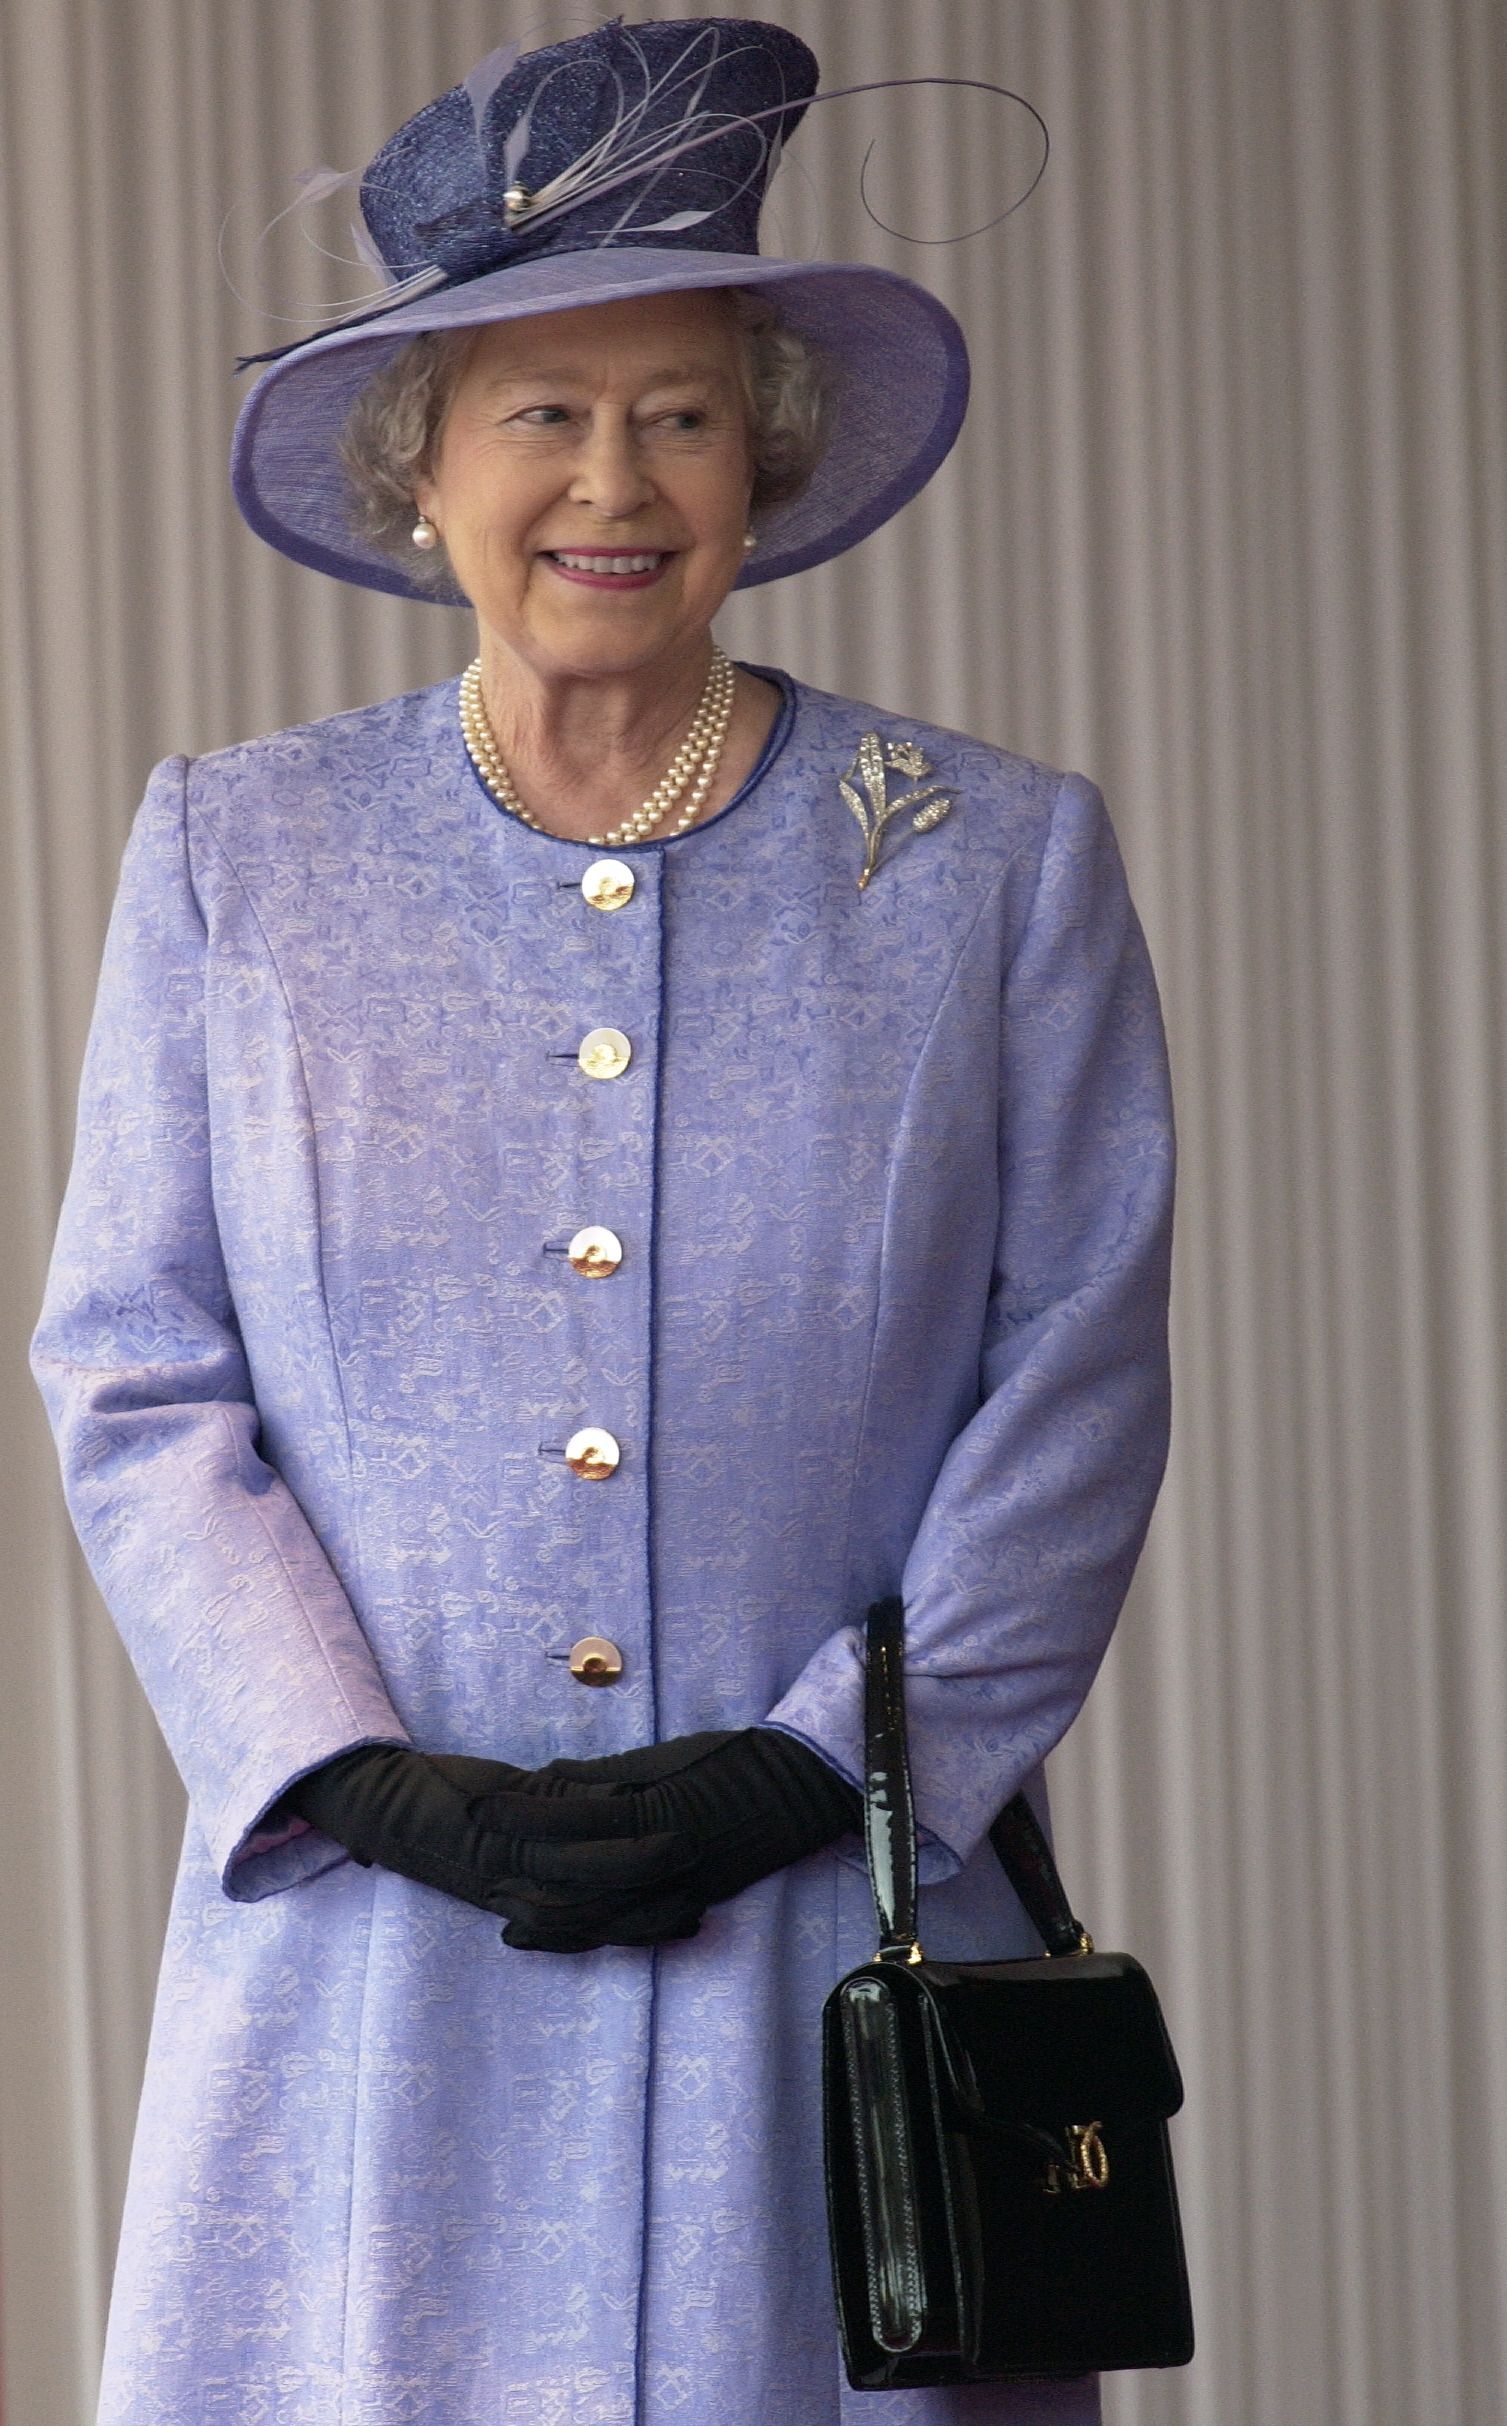 Queen's favourite handbag brand Launer designs brightly coloured